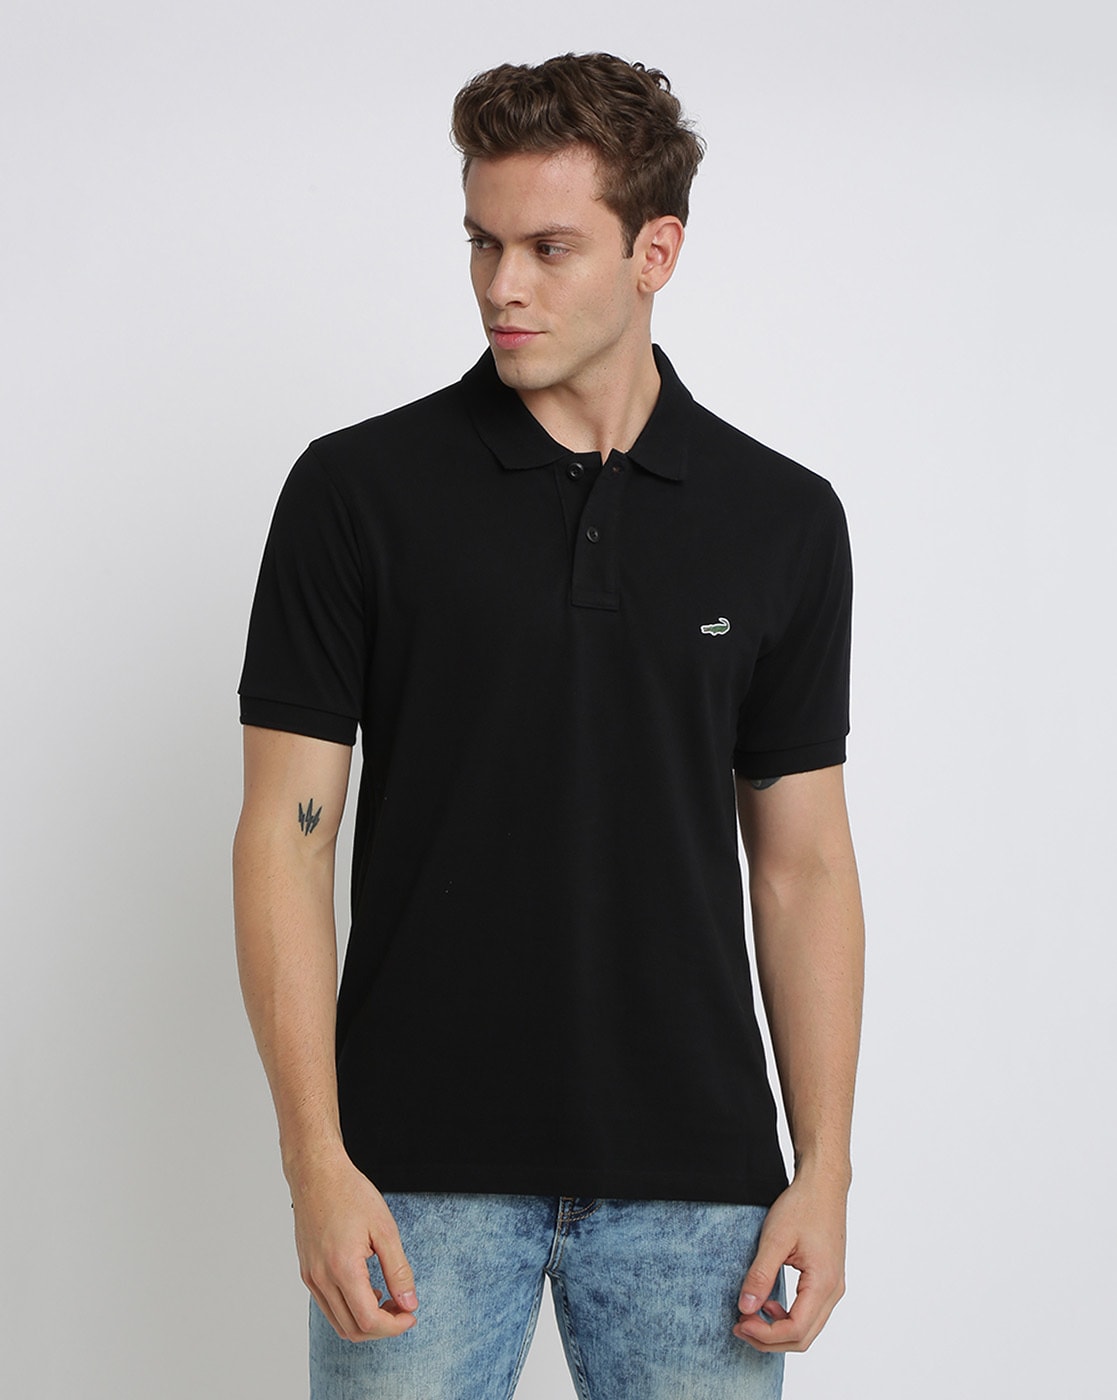 Quilt Variant feudale Buy BLACK Tshirts for Men by CROCODILE Online | Ajio.com